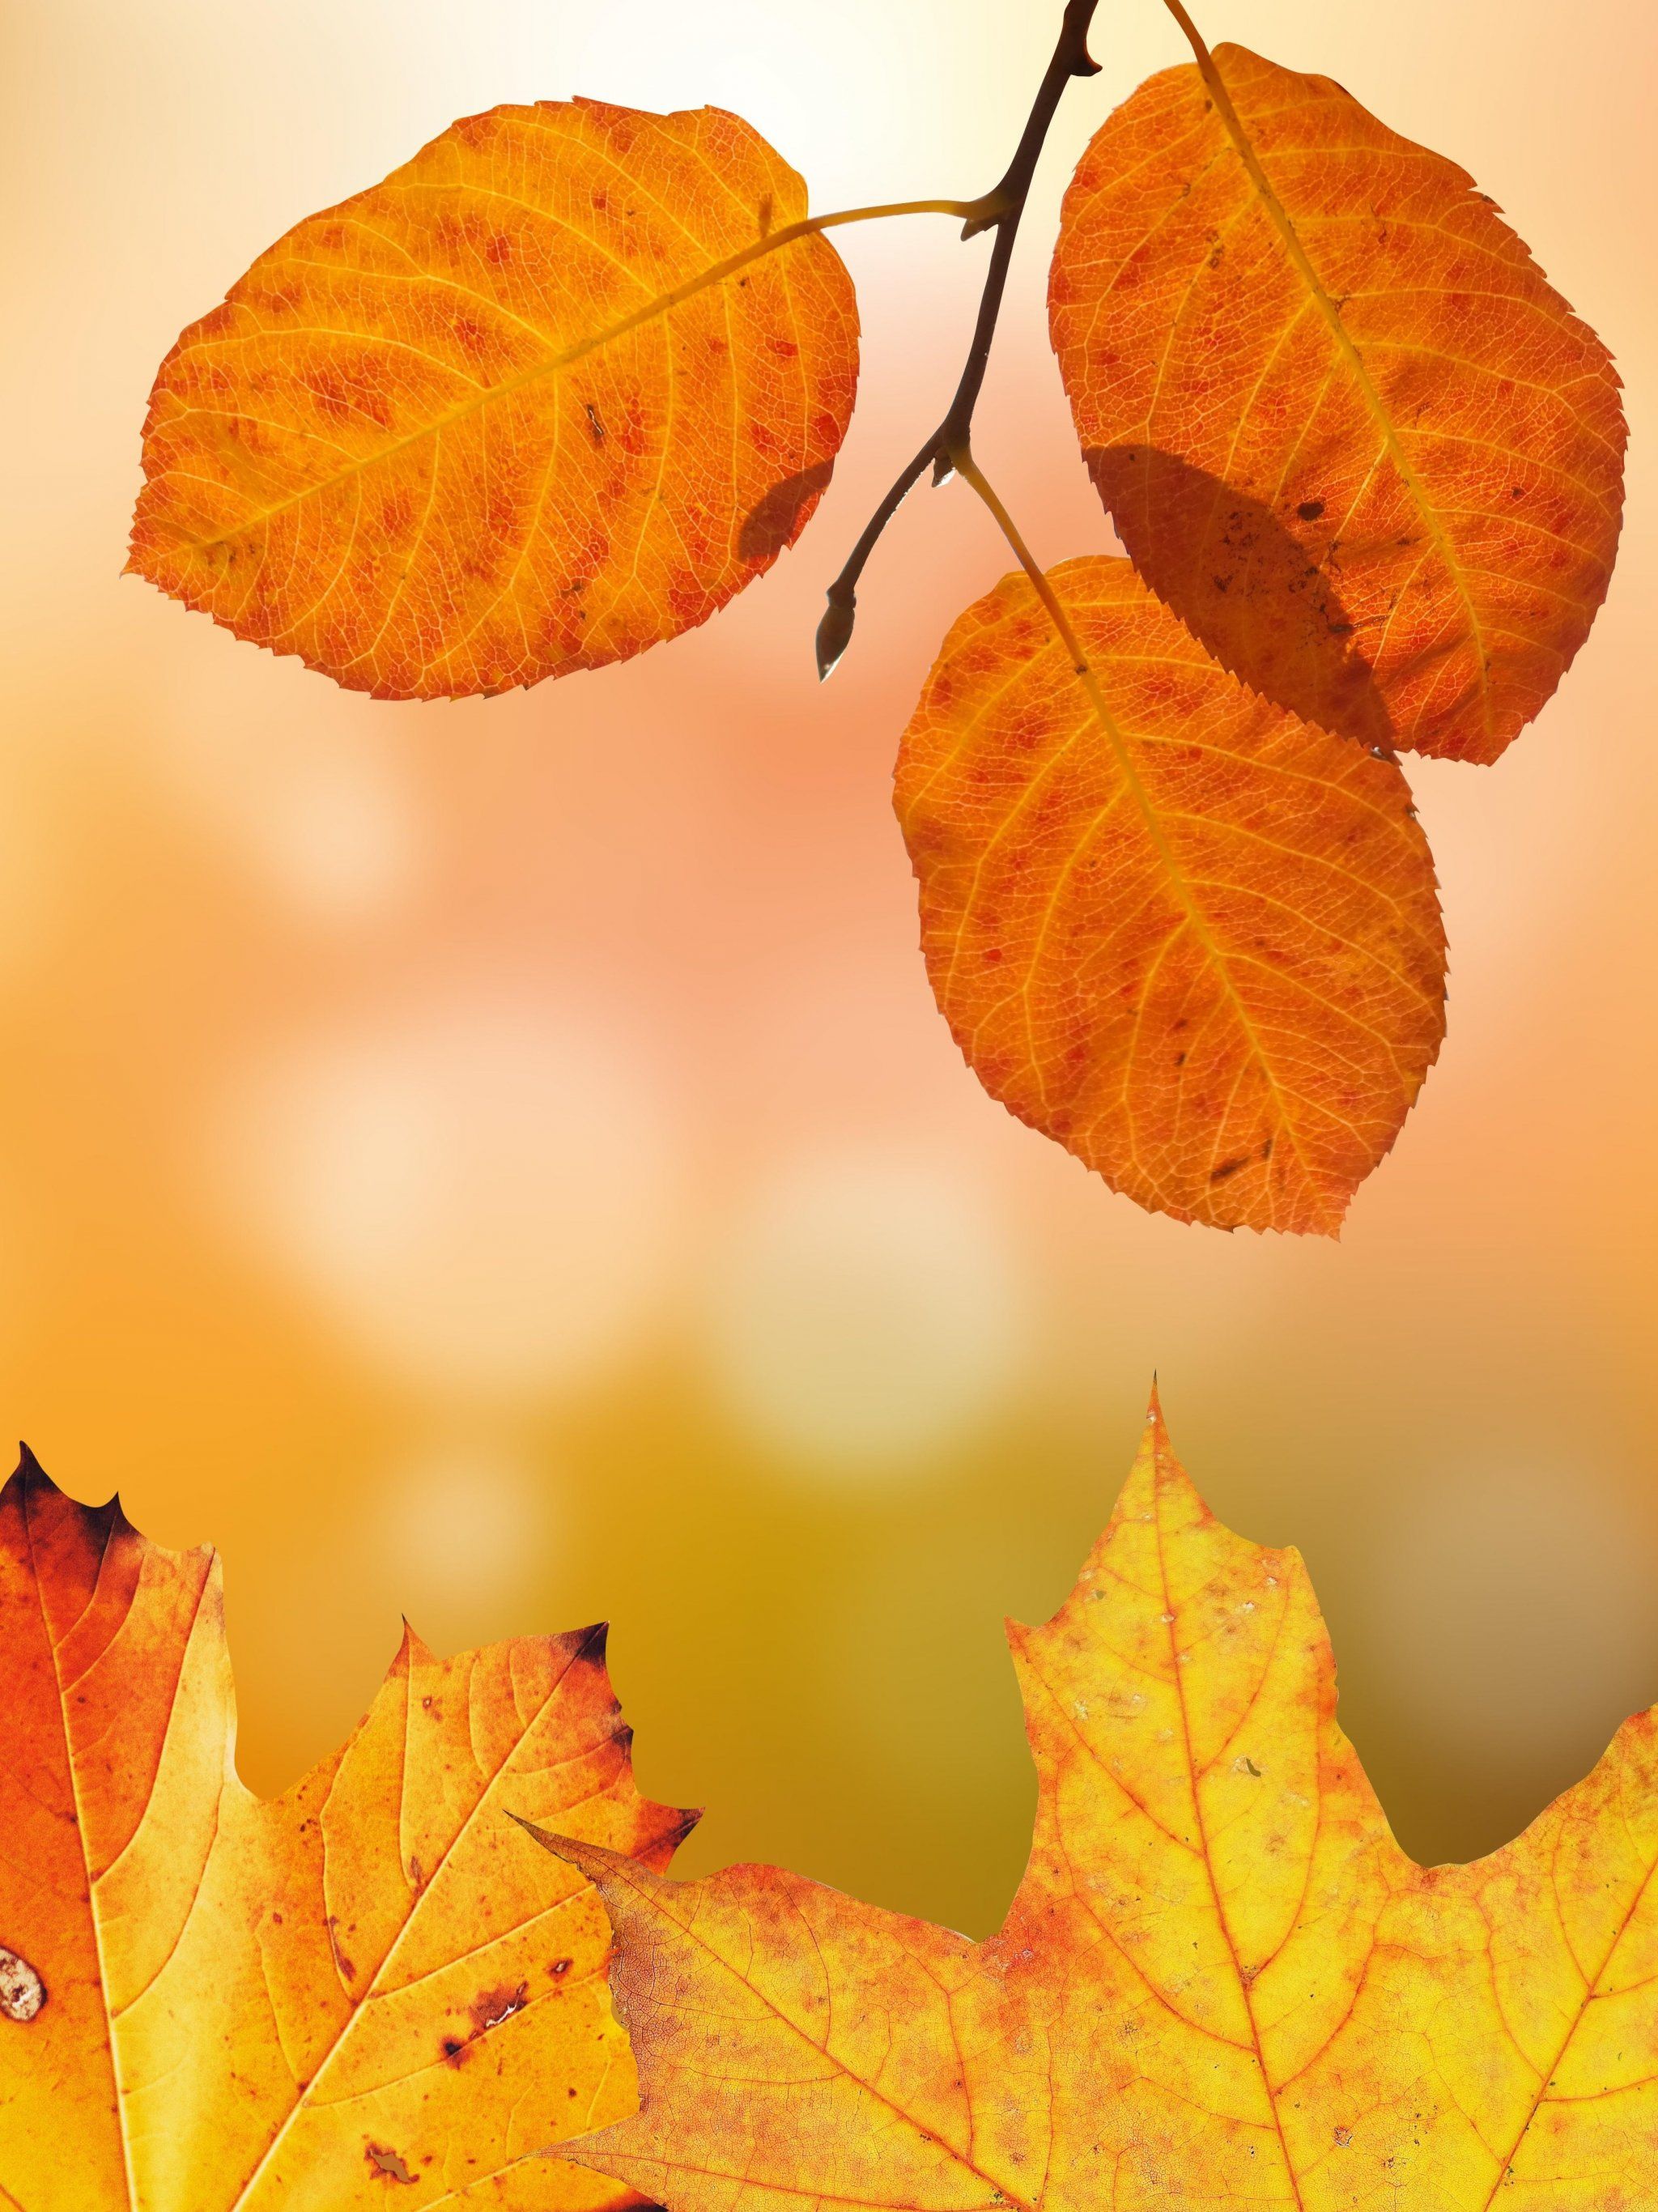 Autumn Leaves Wallpaper, Android & Desktop Background